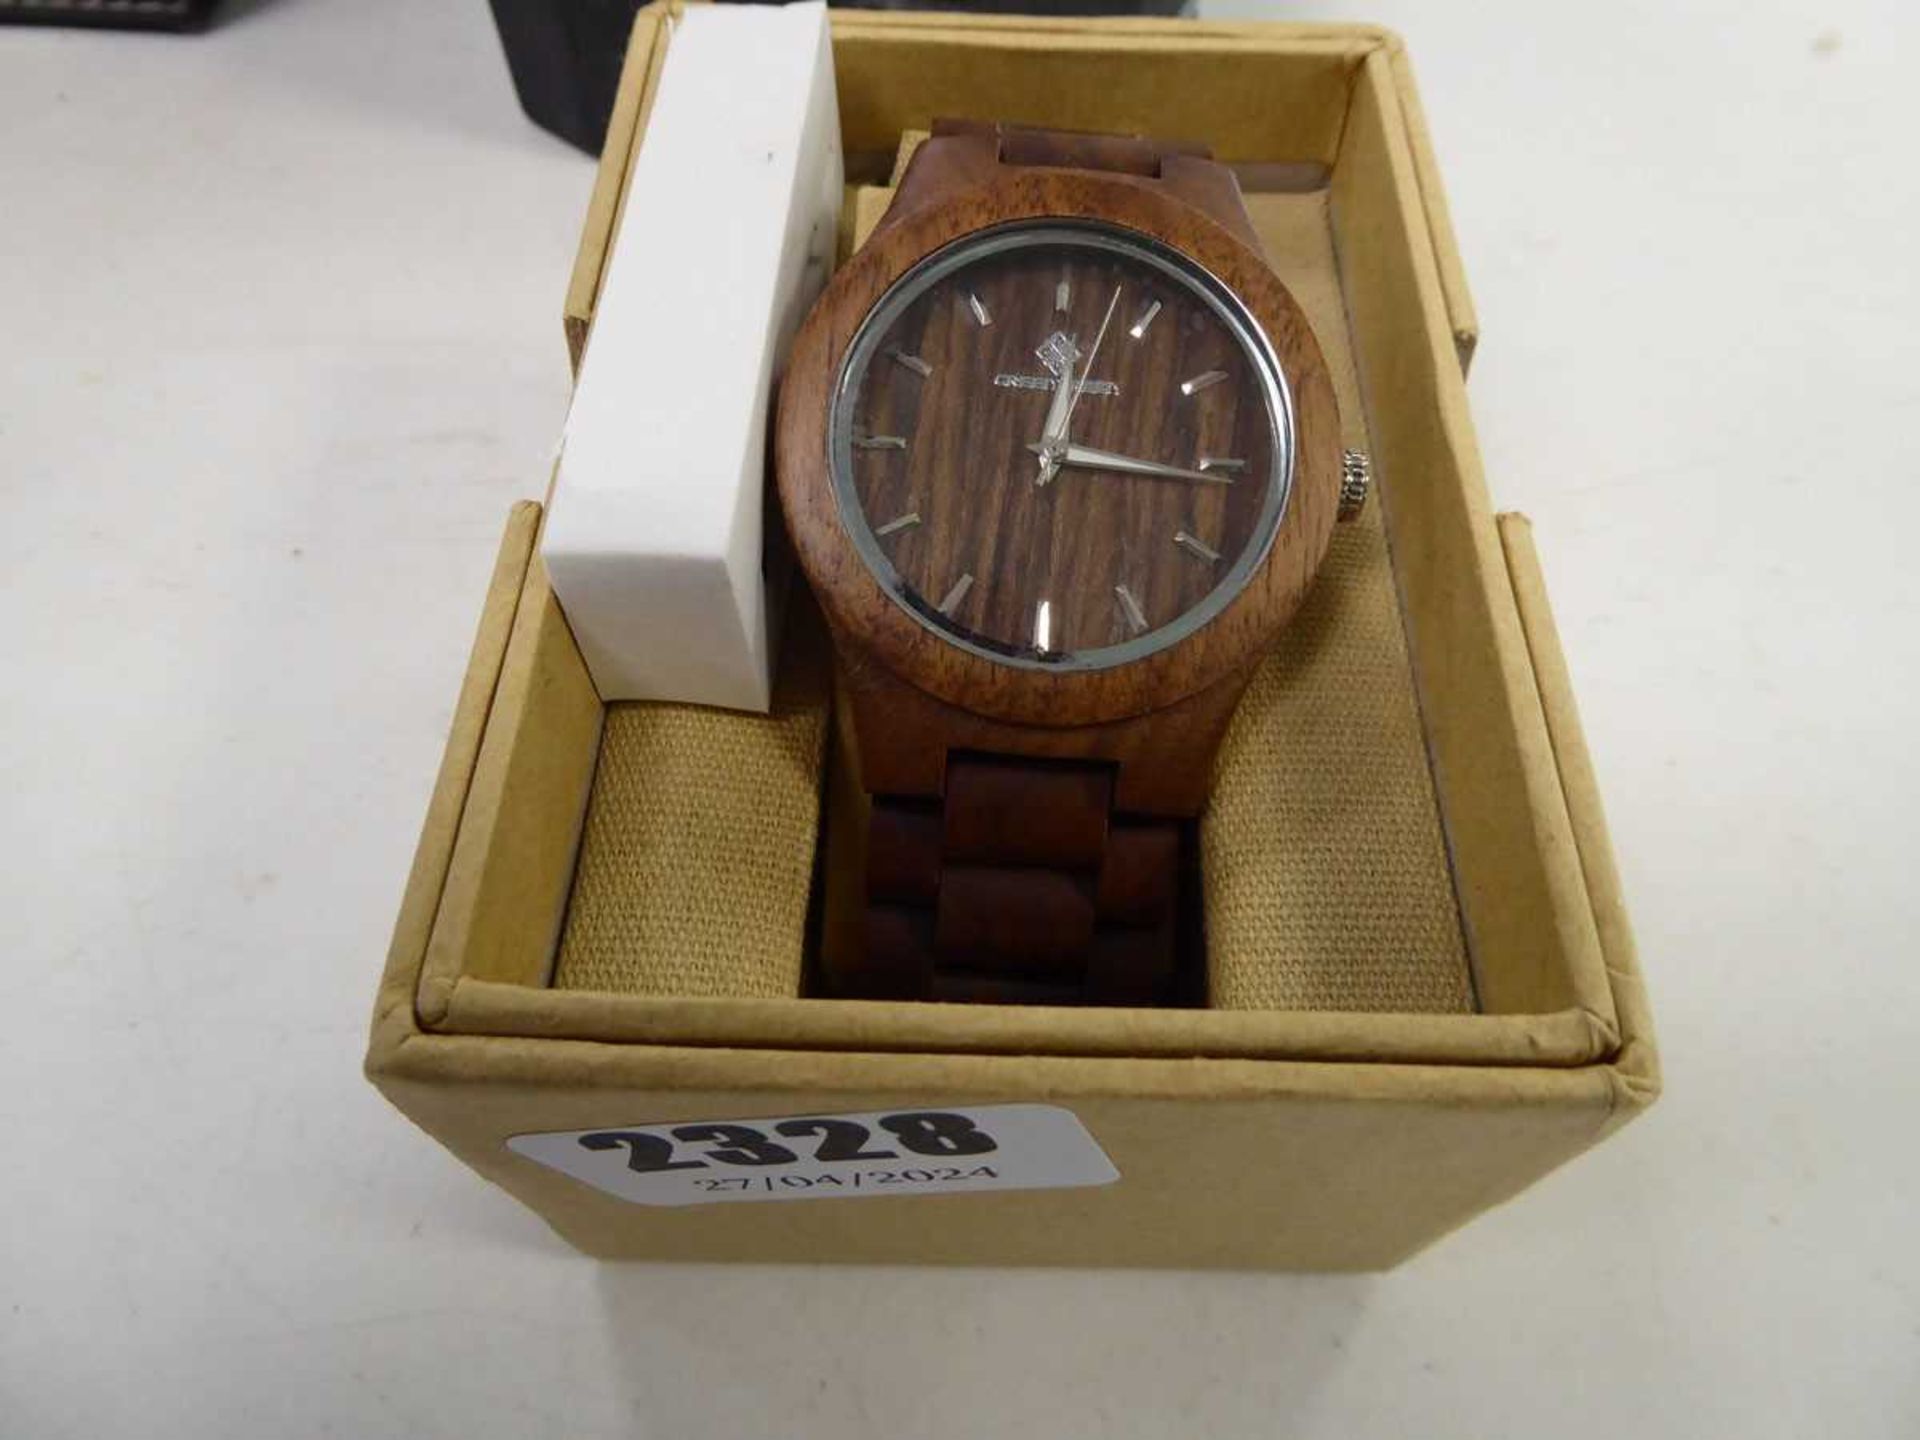 Greentreen wooden wristwatch, in box